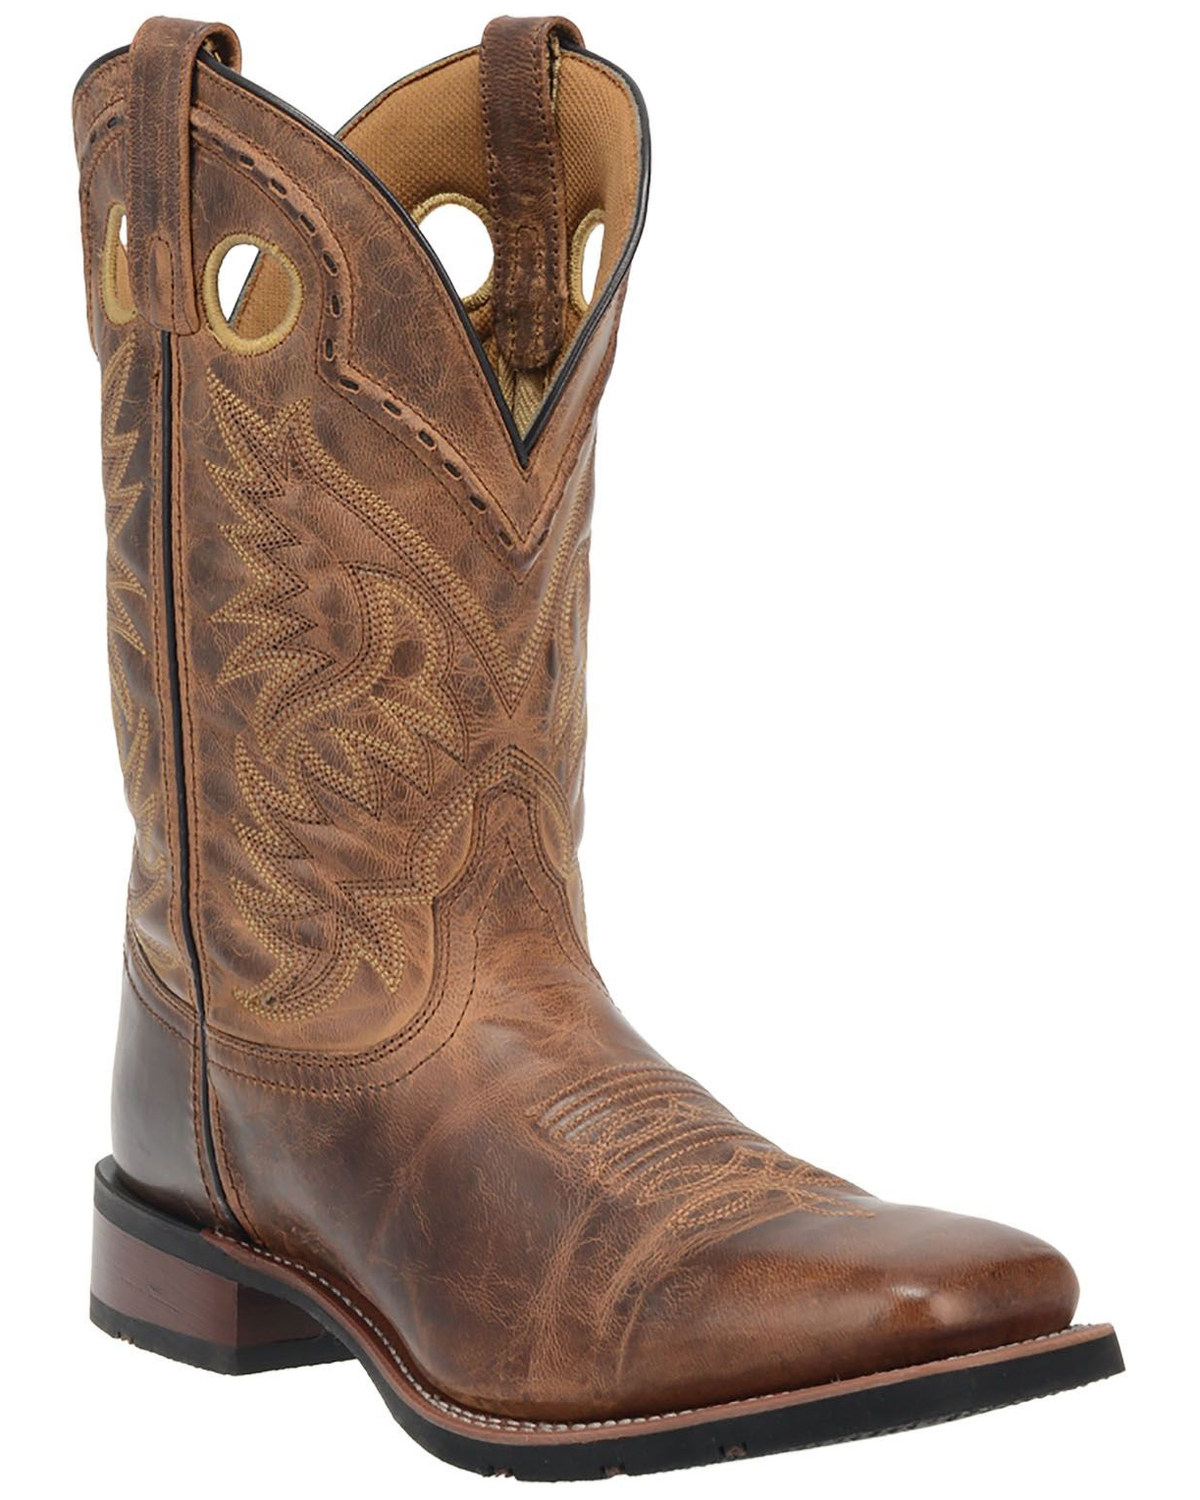 Laredo Men's Kane Western Boots - Broad Square Toe